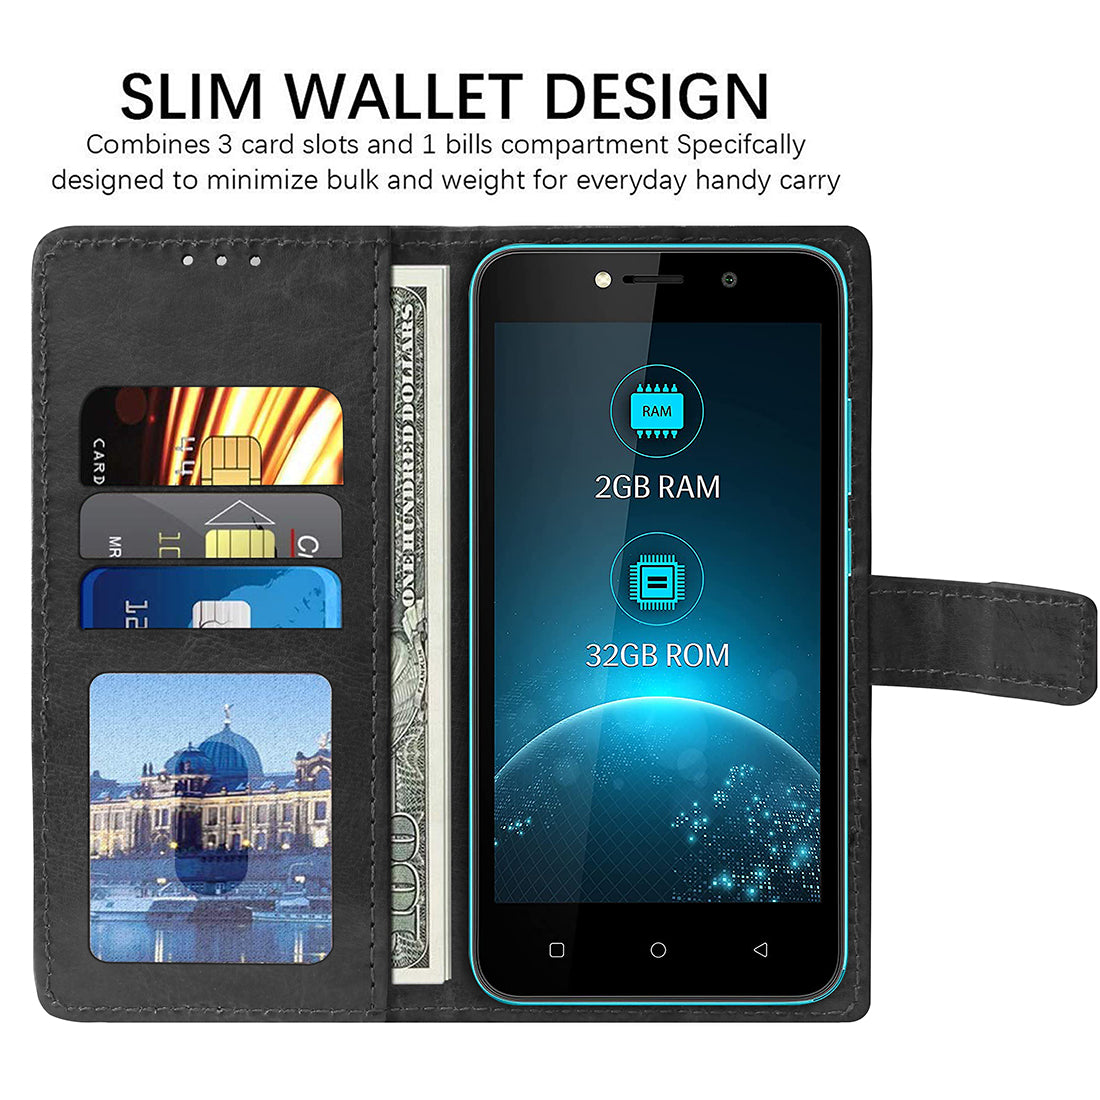 Premium Wallet Flip Cover for Lava Z21